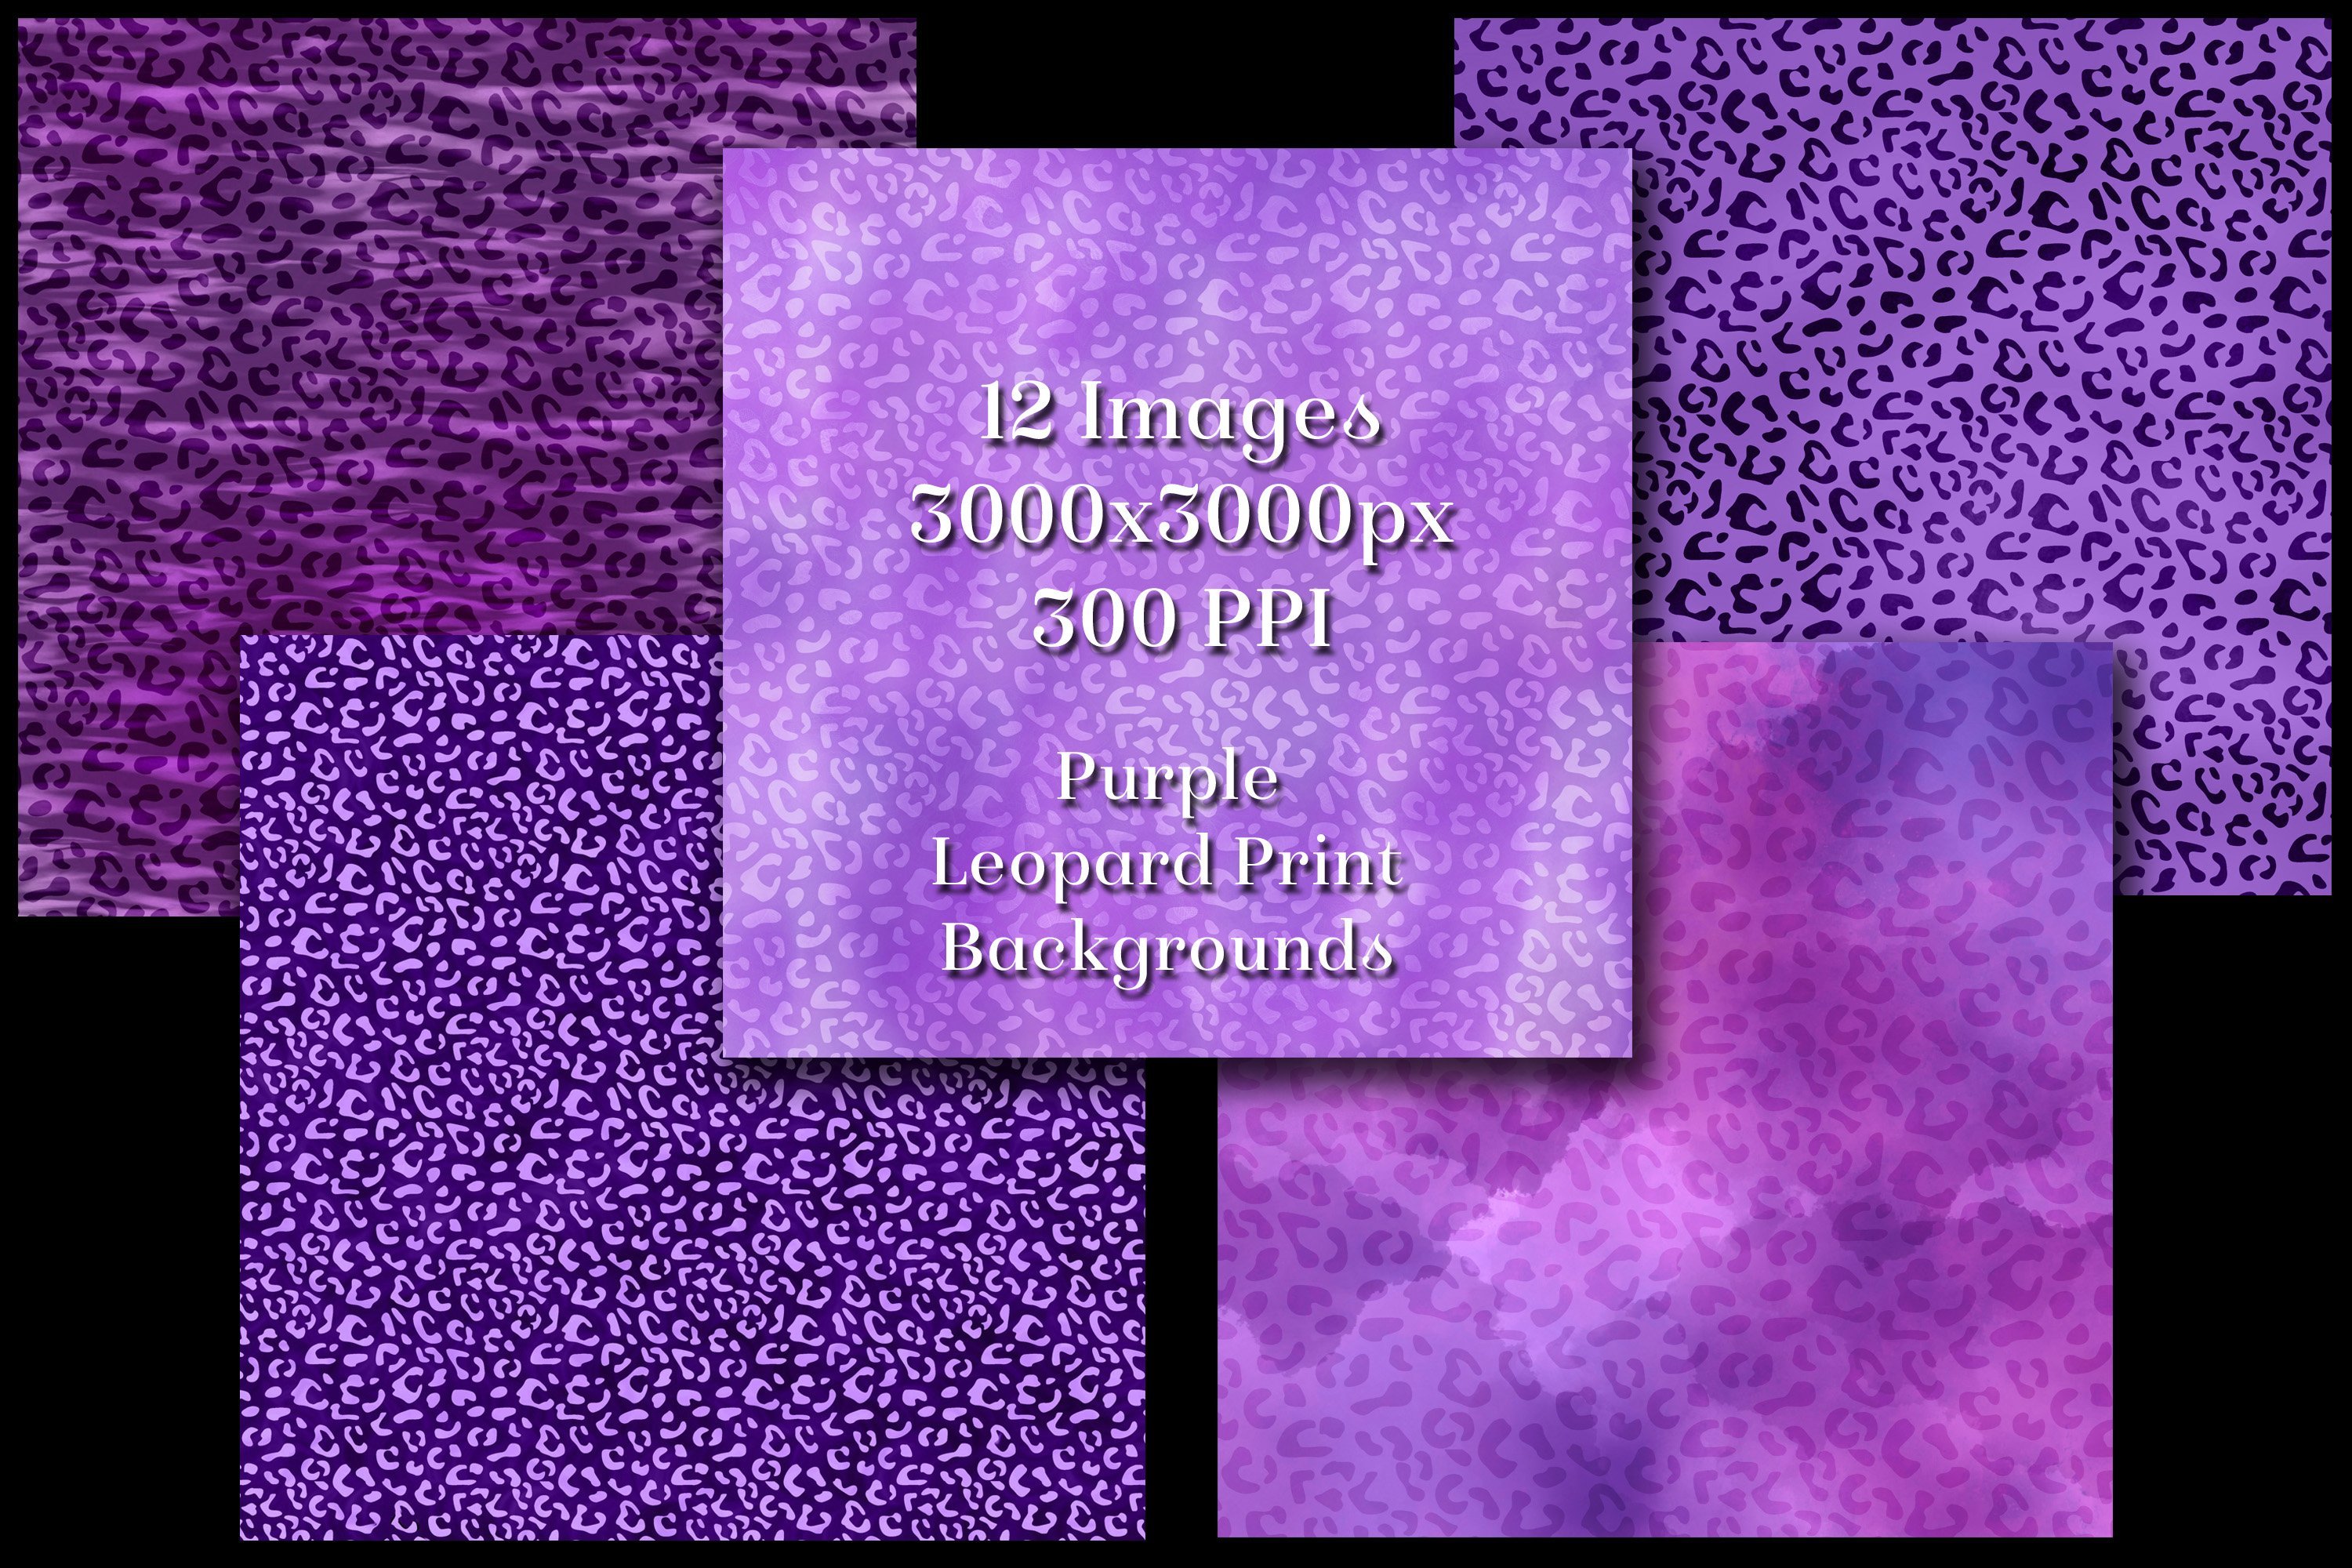 Purple Leopard Print Backgrounds preview image.